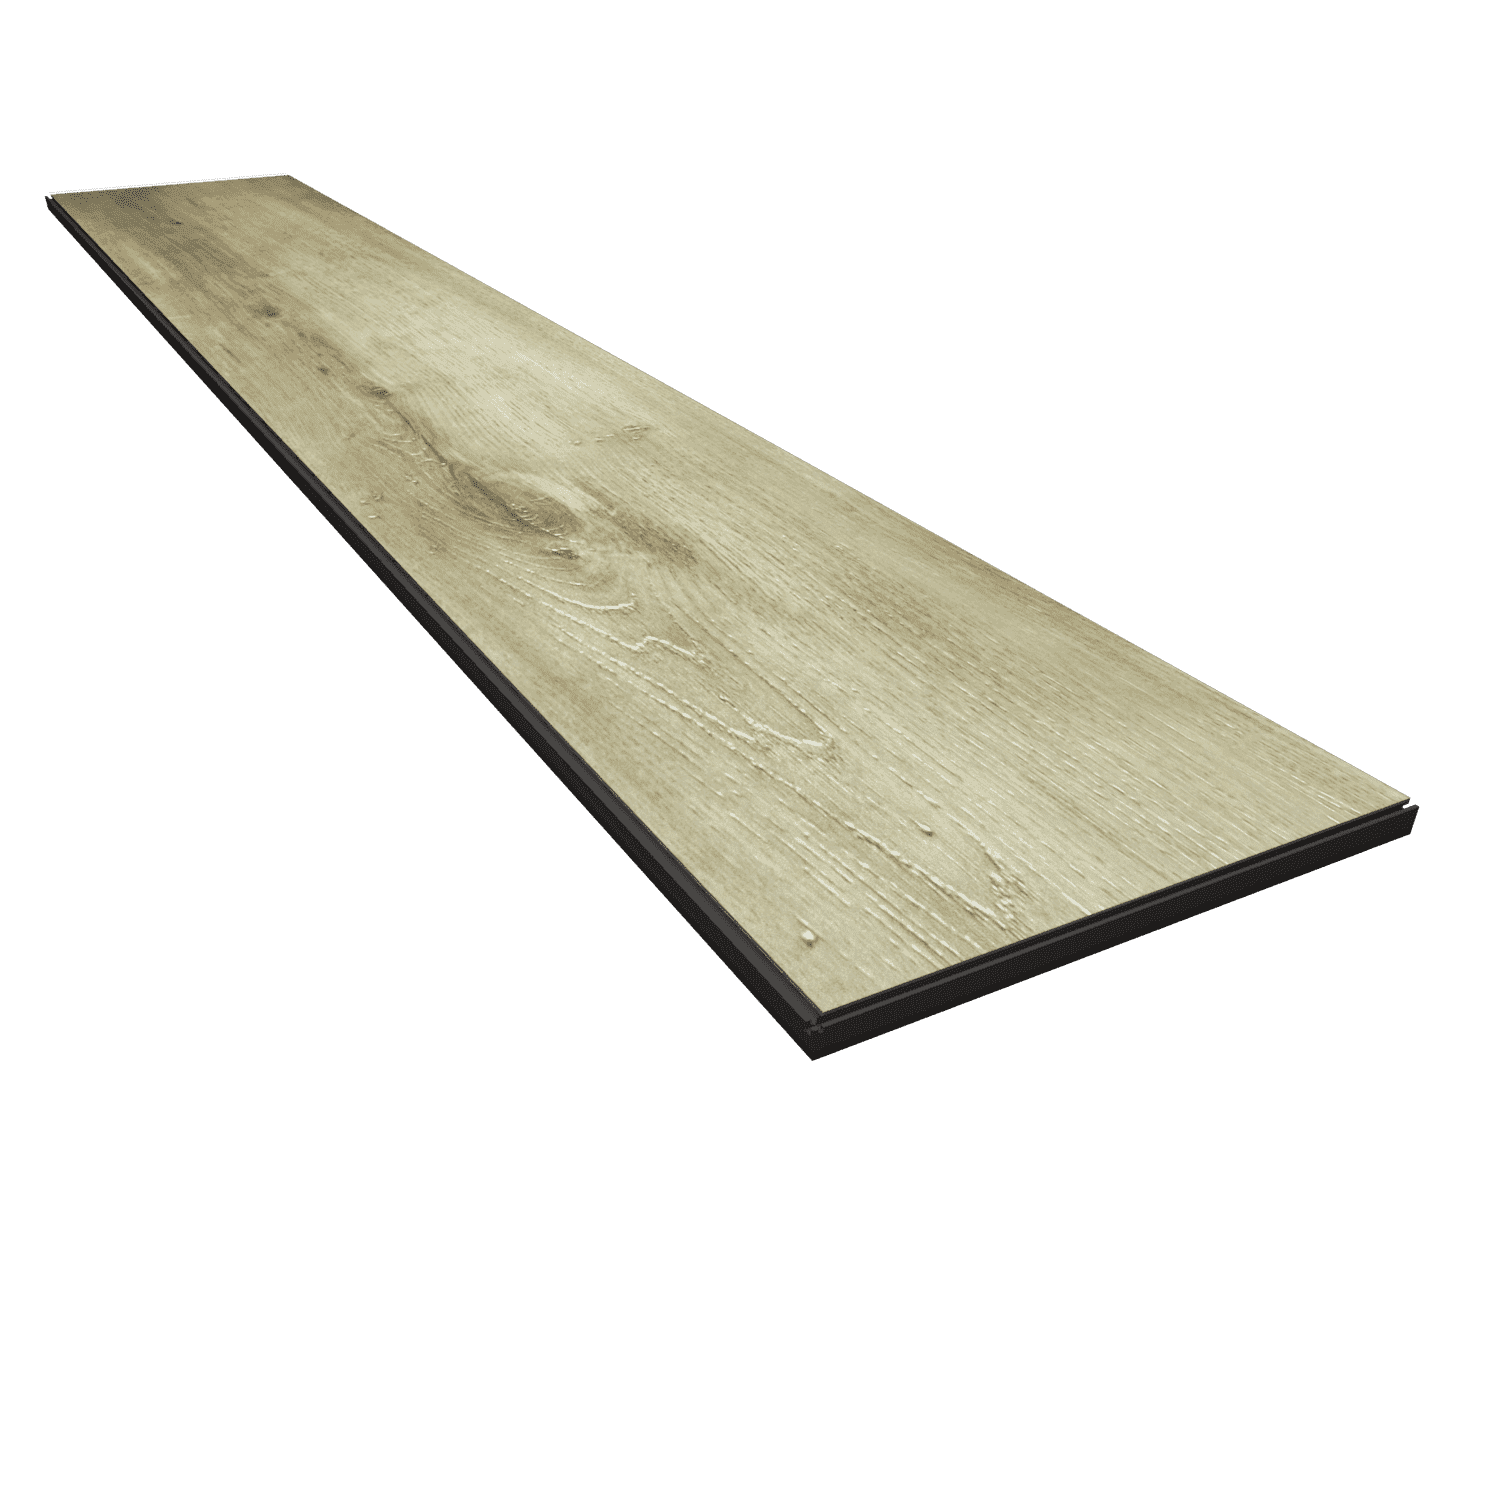 5 reasons to choose Timbee wood flooring